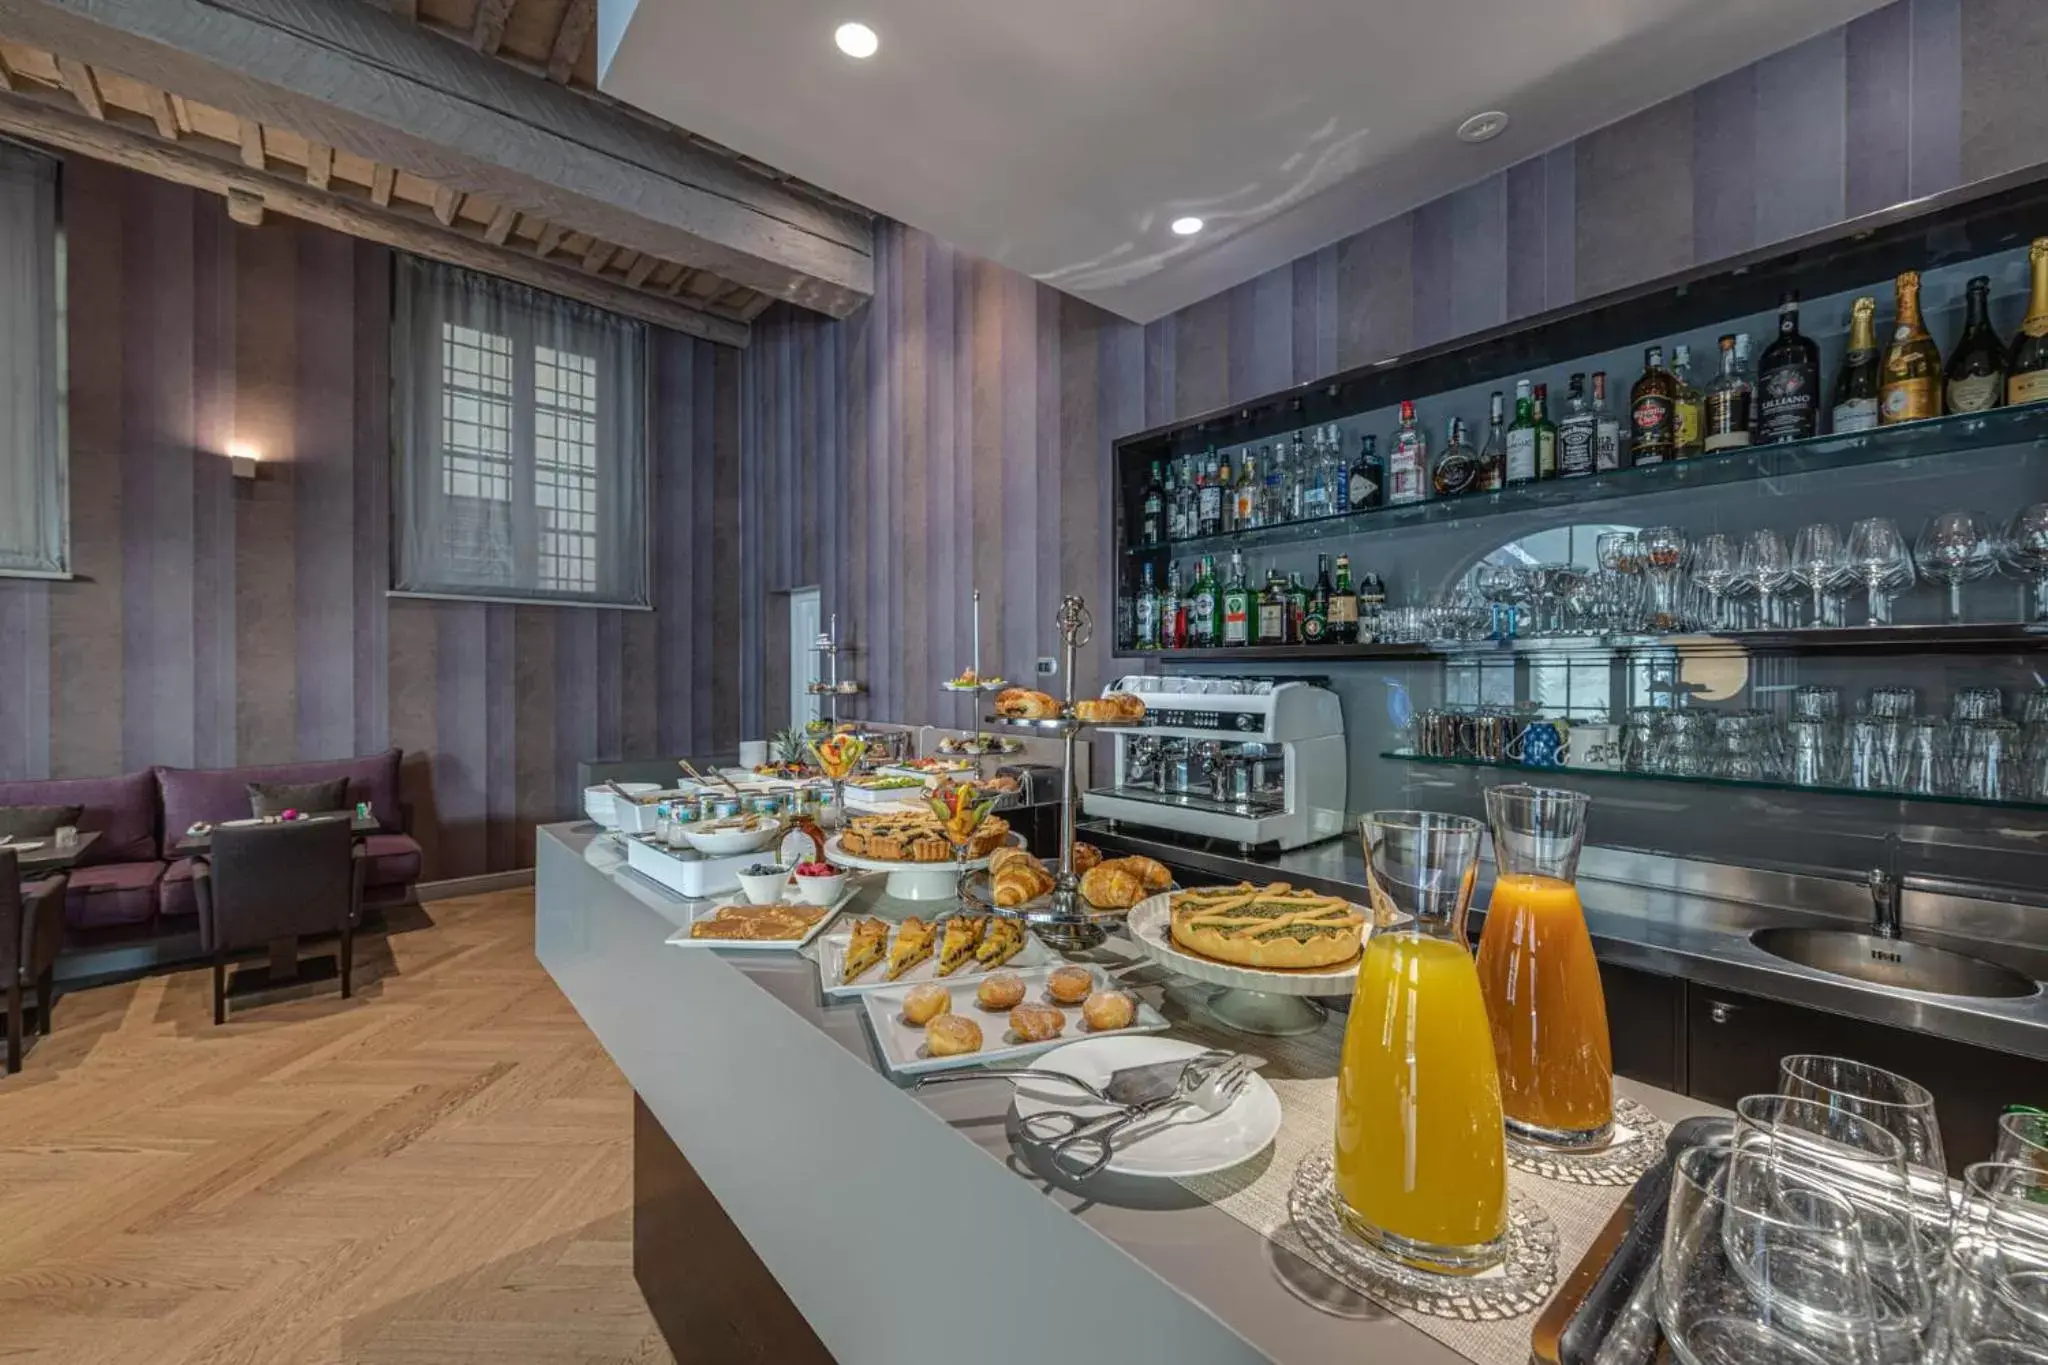 Buffet breakfast in Palazzo Dipinto